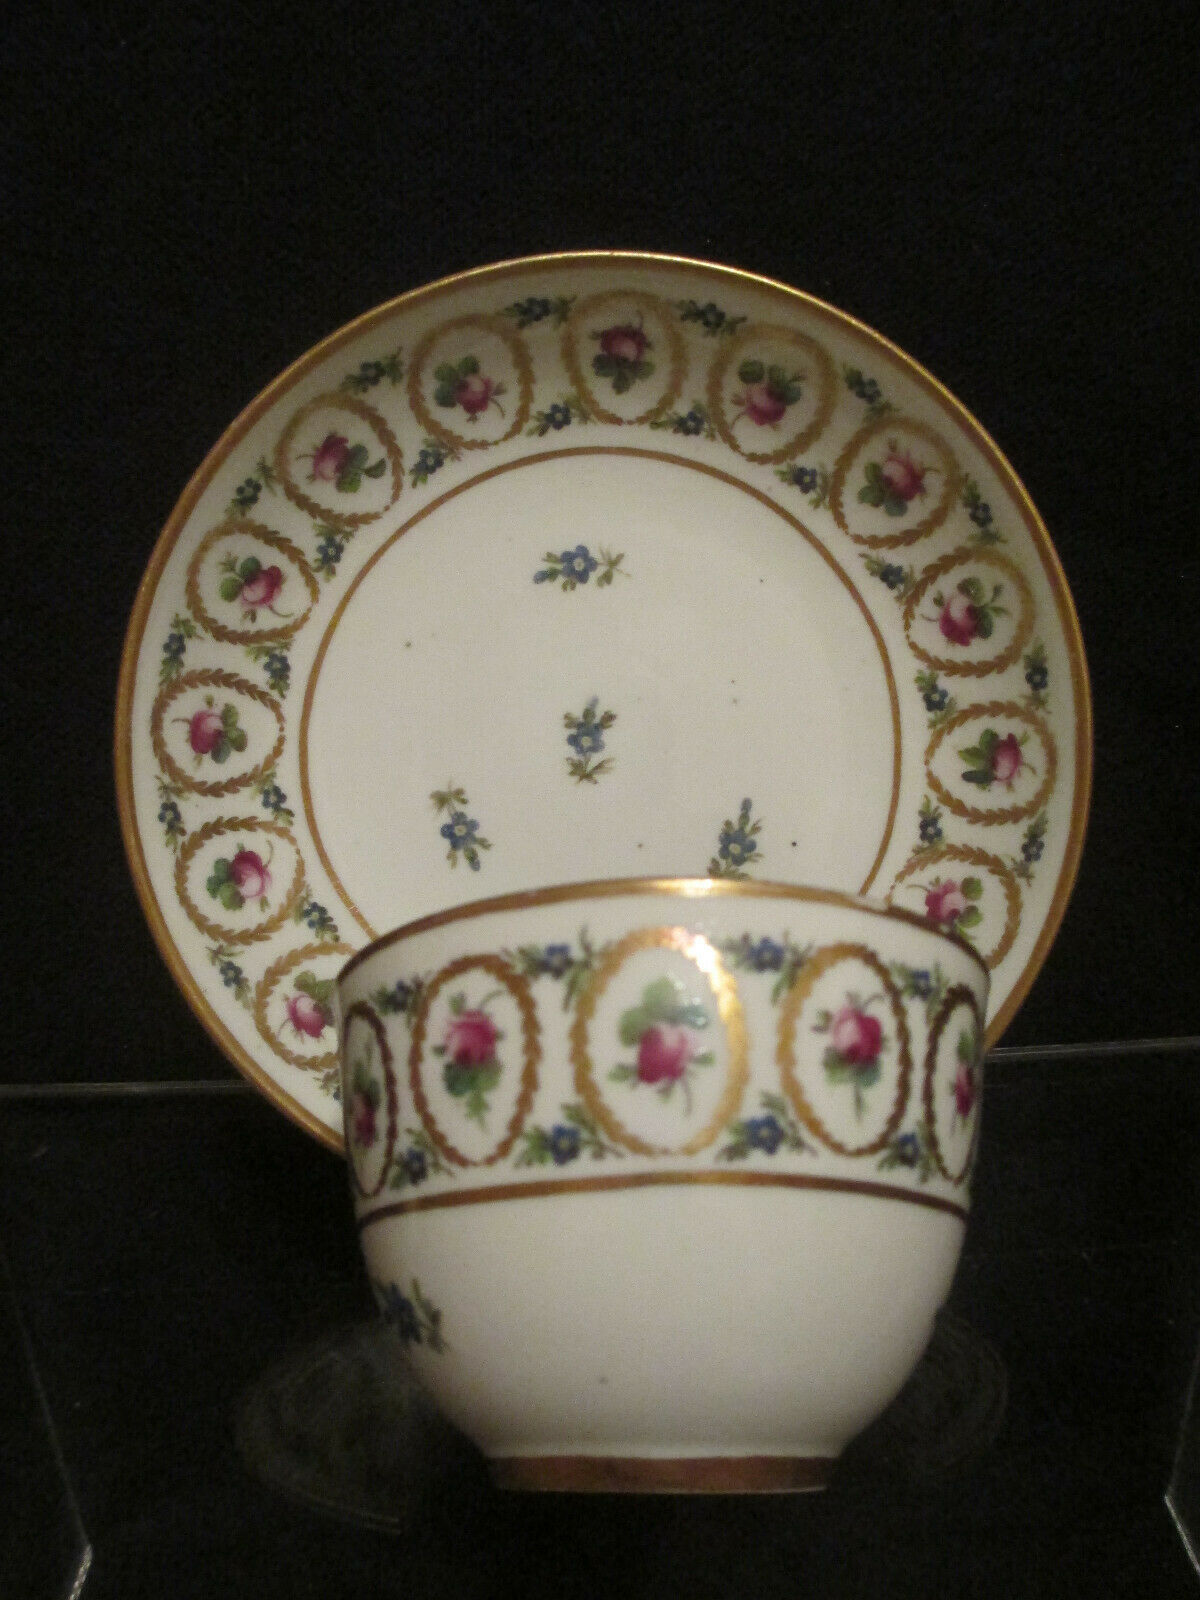 Loodsrecht Florale Teeschale und Untertasse 1771-84